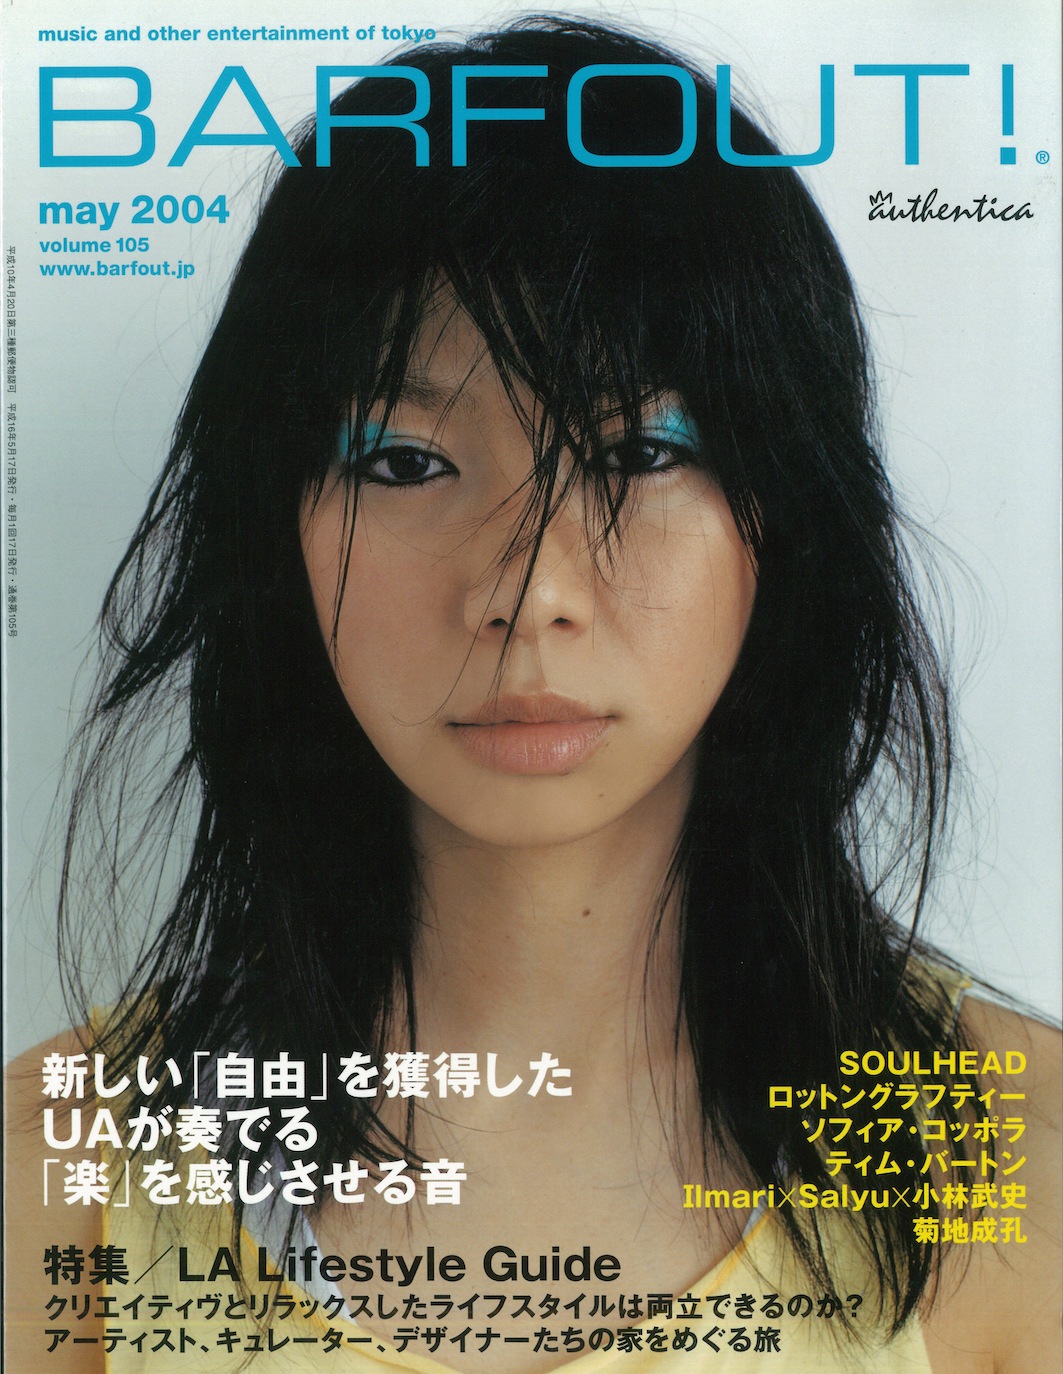 MAY 2004 VOLUME 105